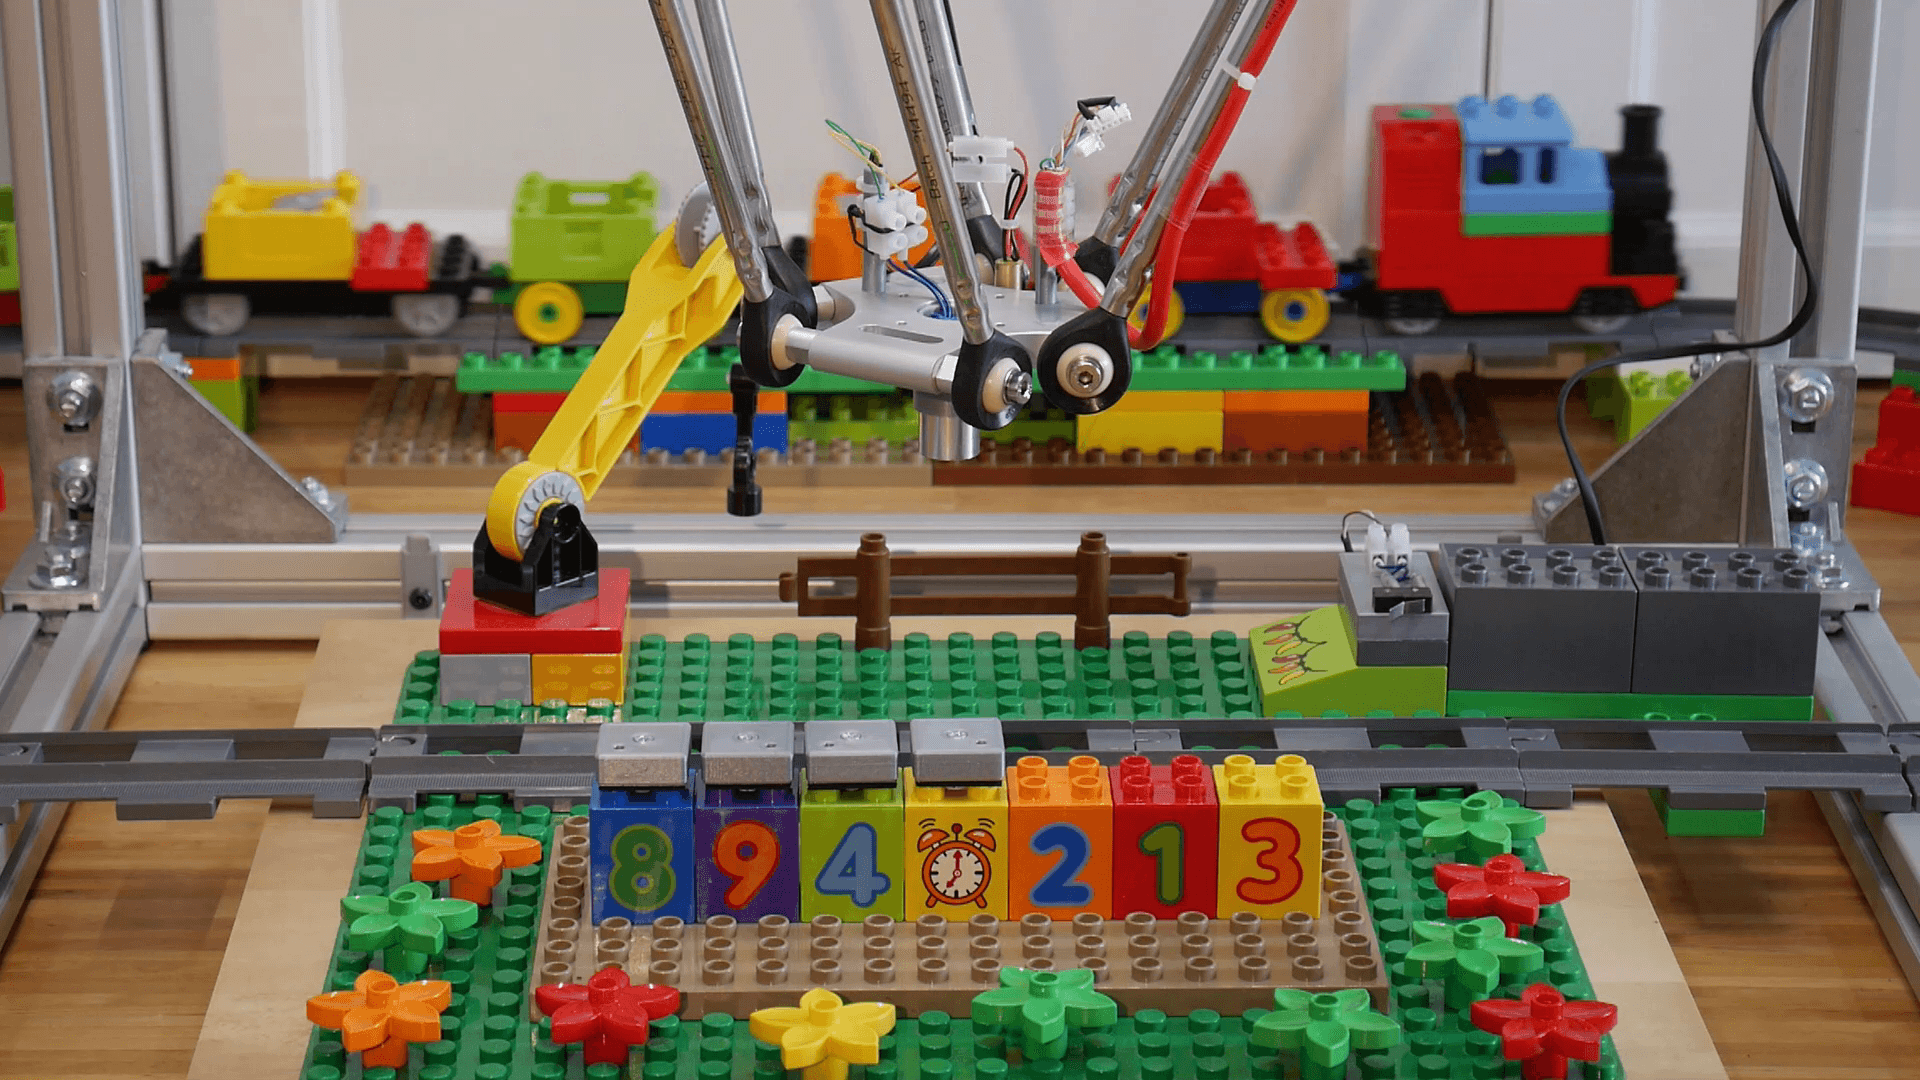 Lego build with a Delta robot